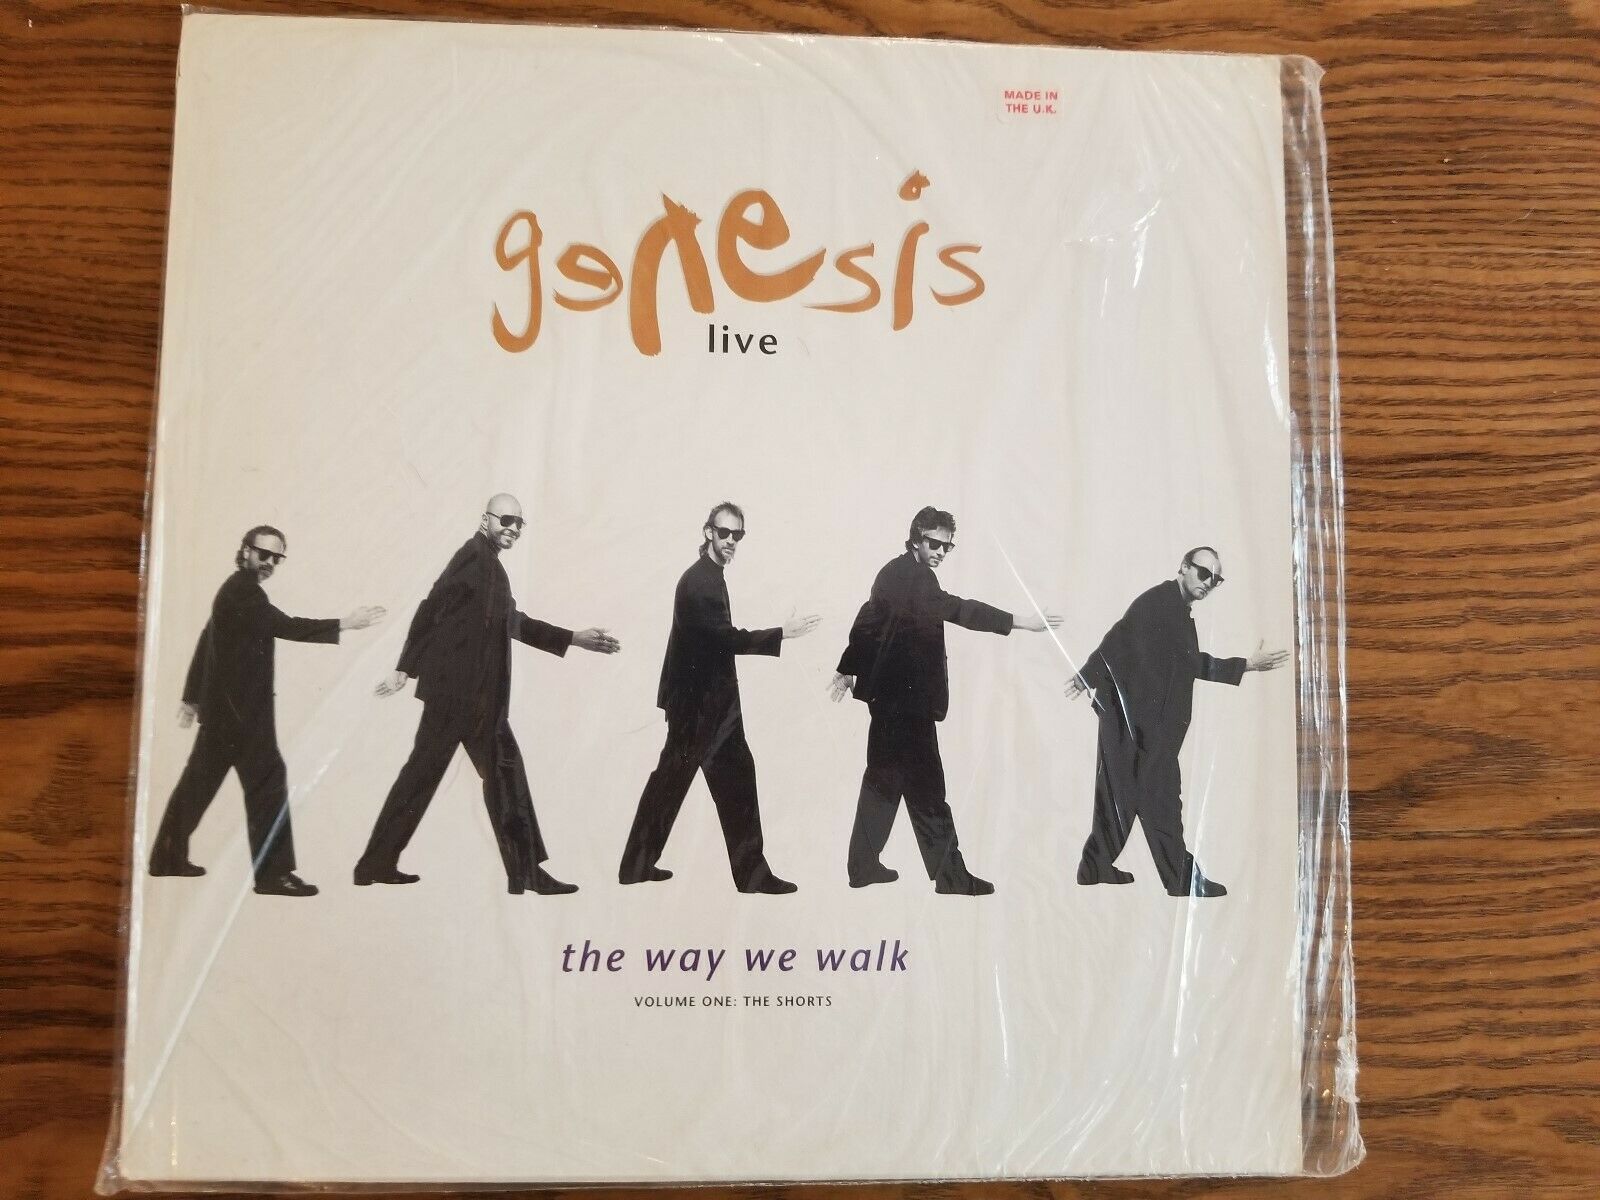 Genesis - Live: The Way We Walk Vol. 1: The Shorts LP vinyl record NEW sealed